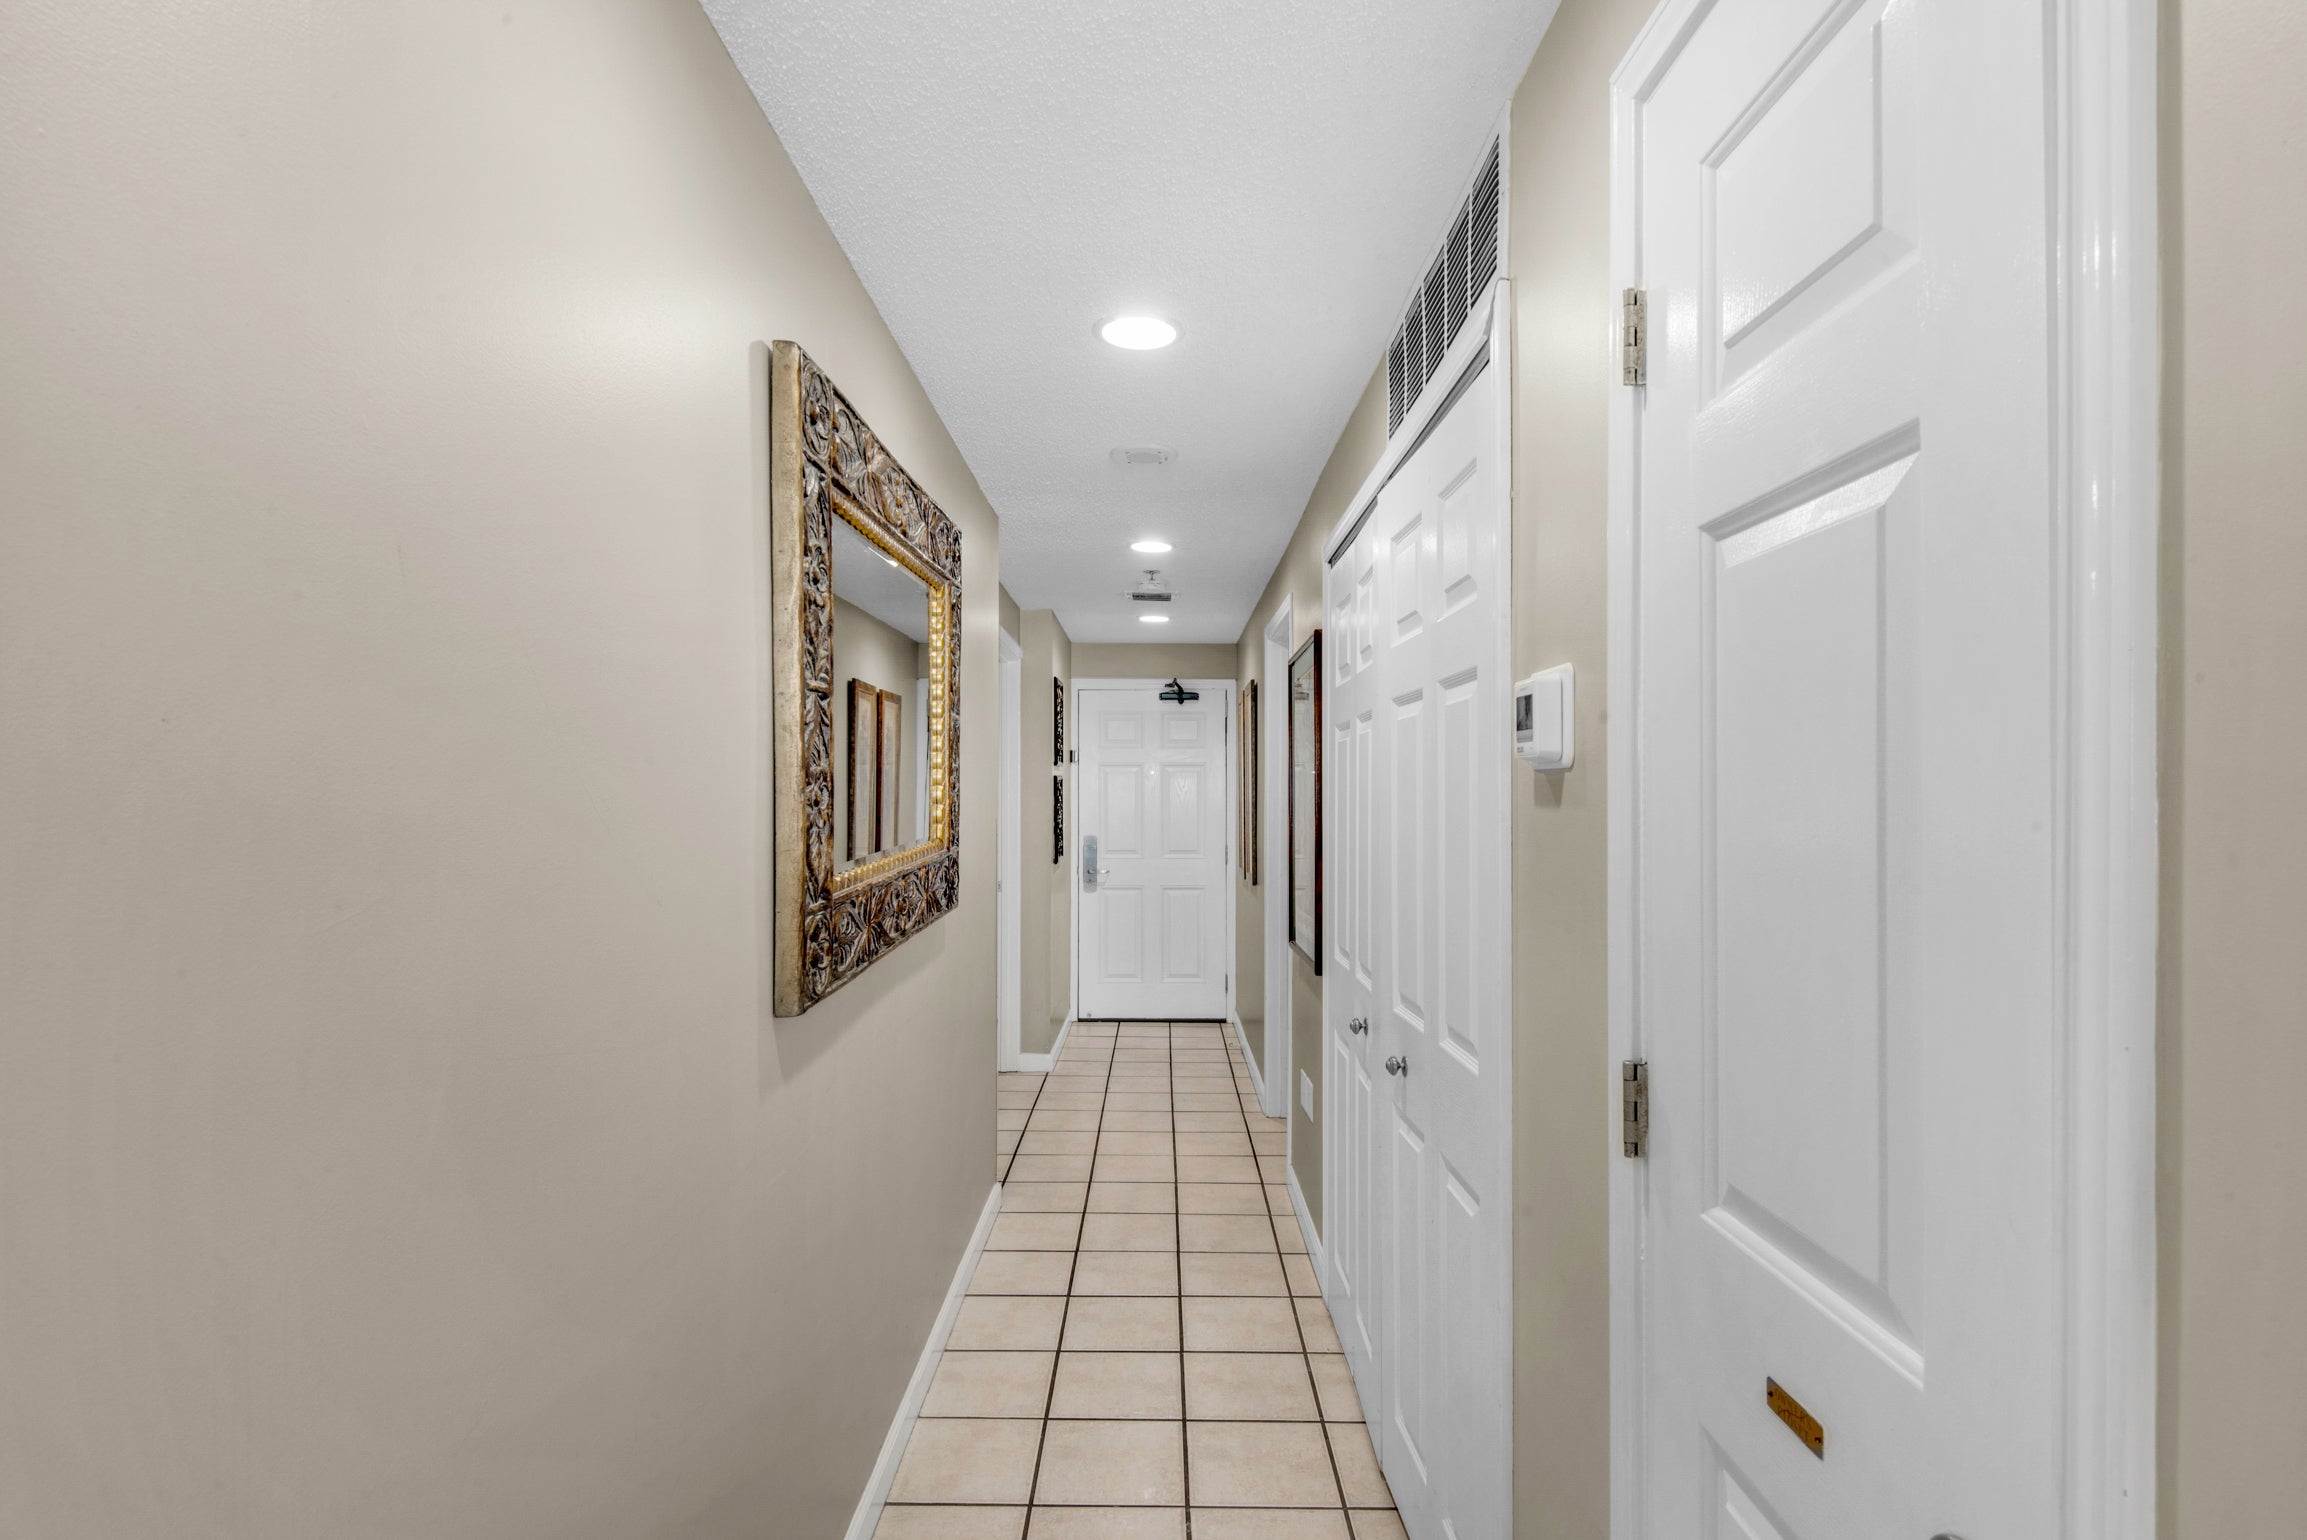 Hallway to guest rooms